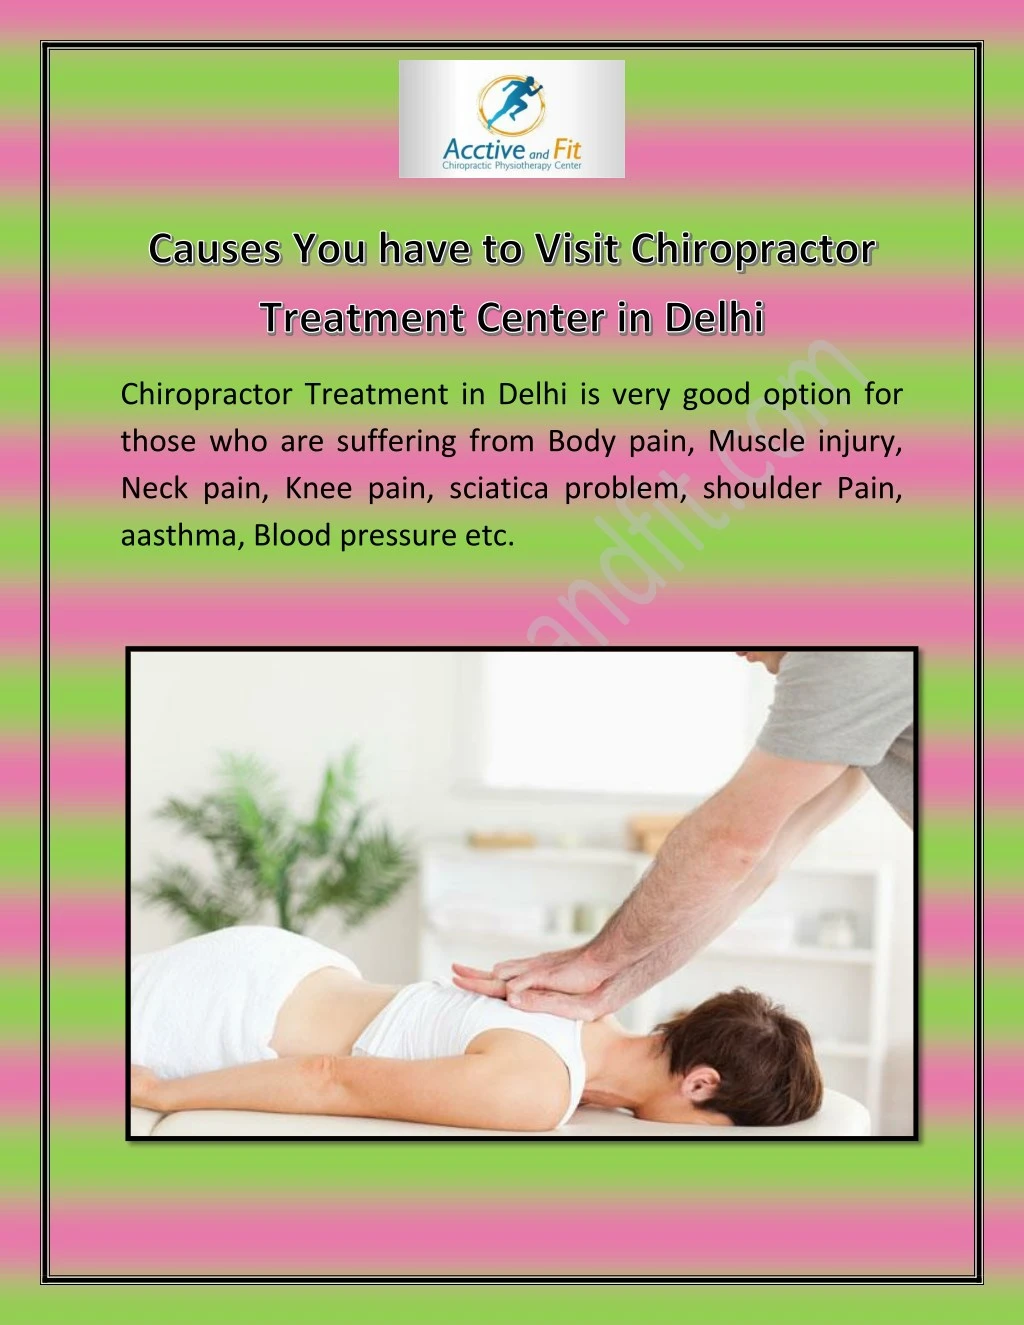 chiropractor treatment in delhi is very good